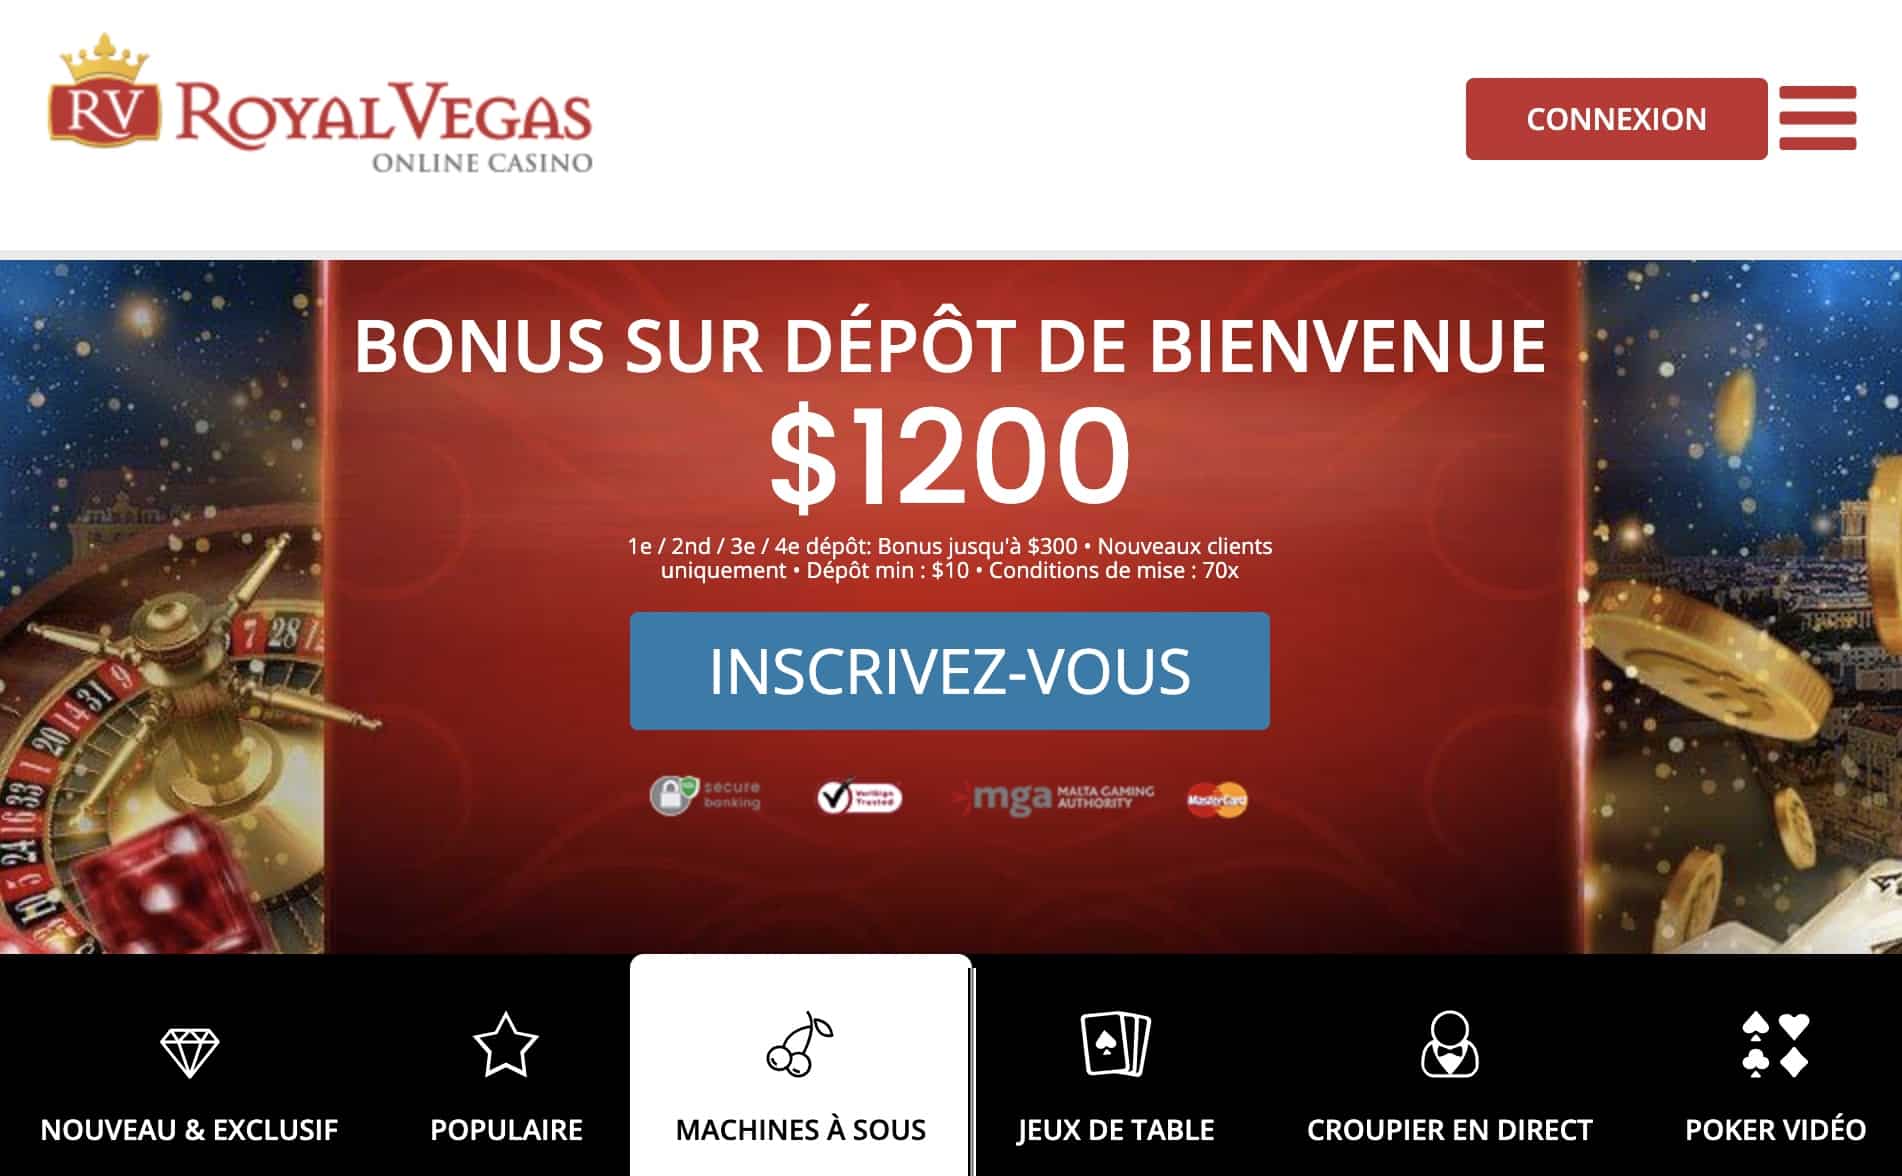 Royal Vegas Casino Homepage